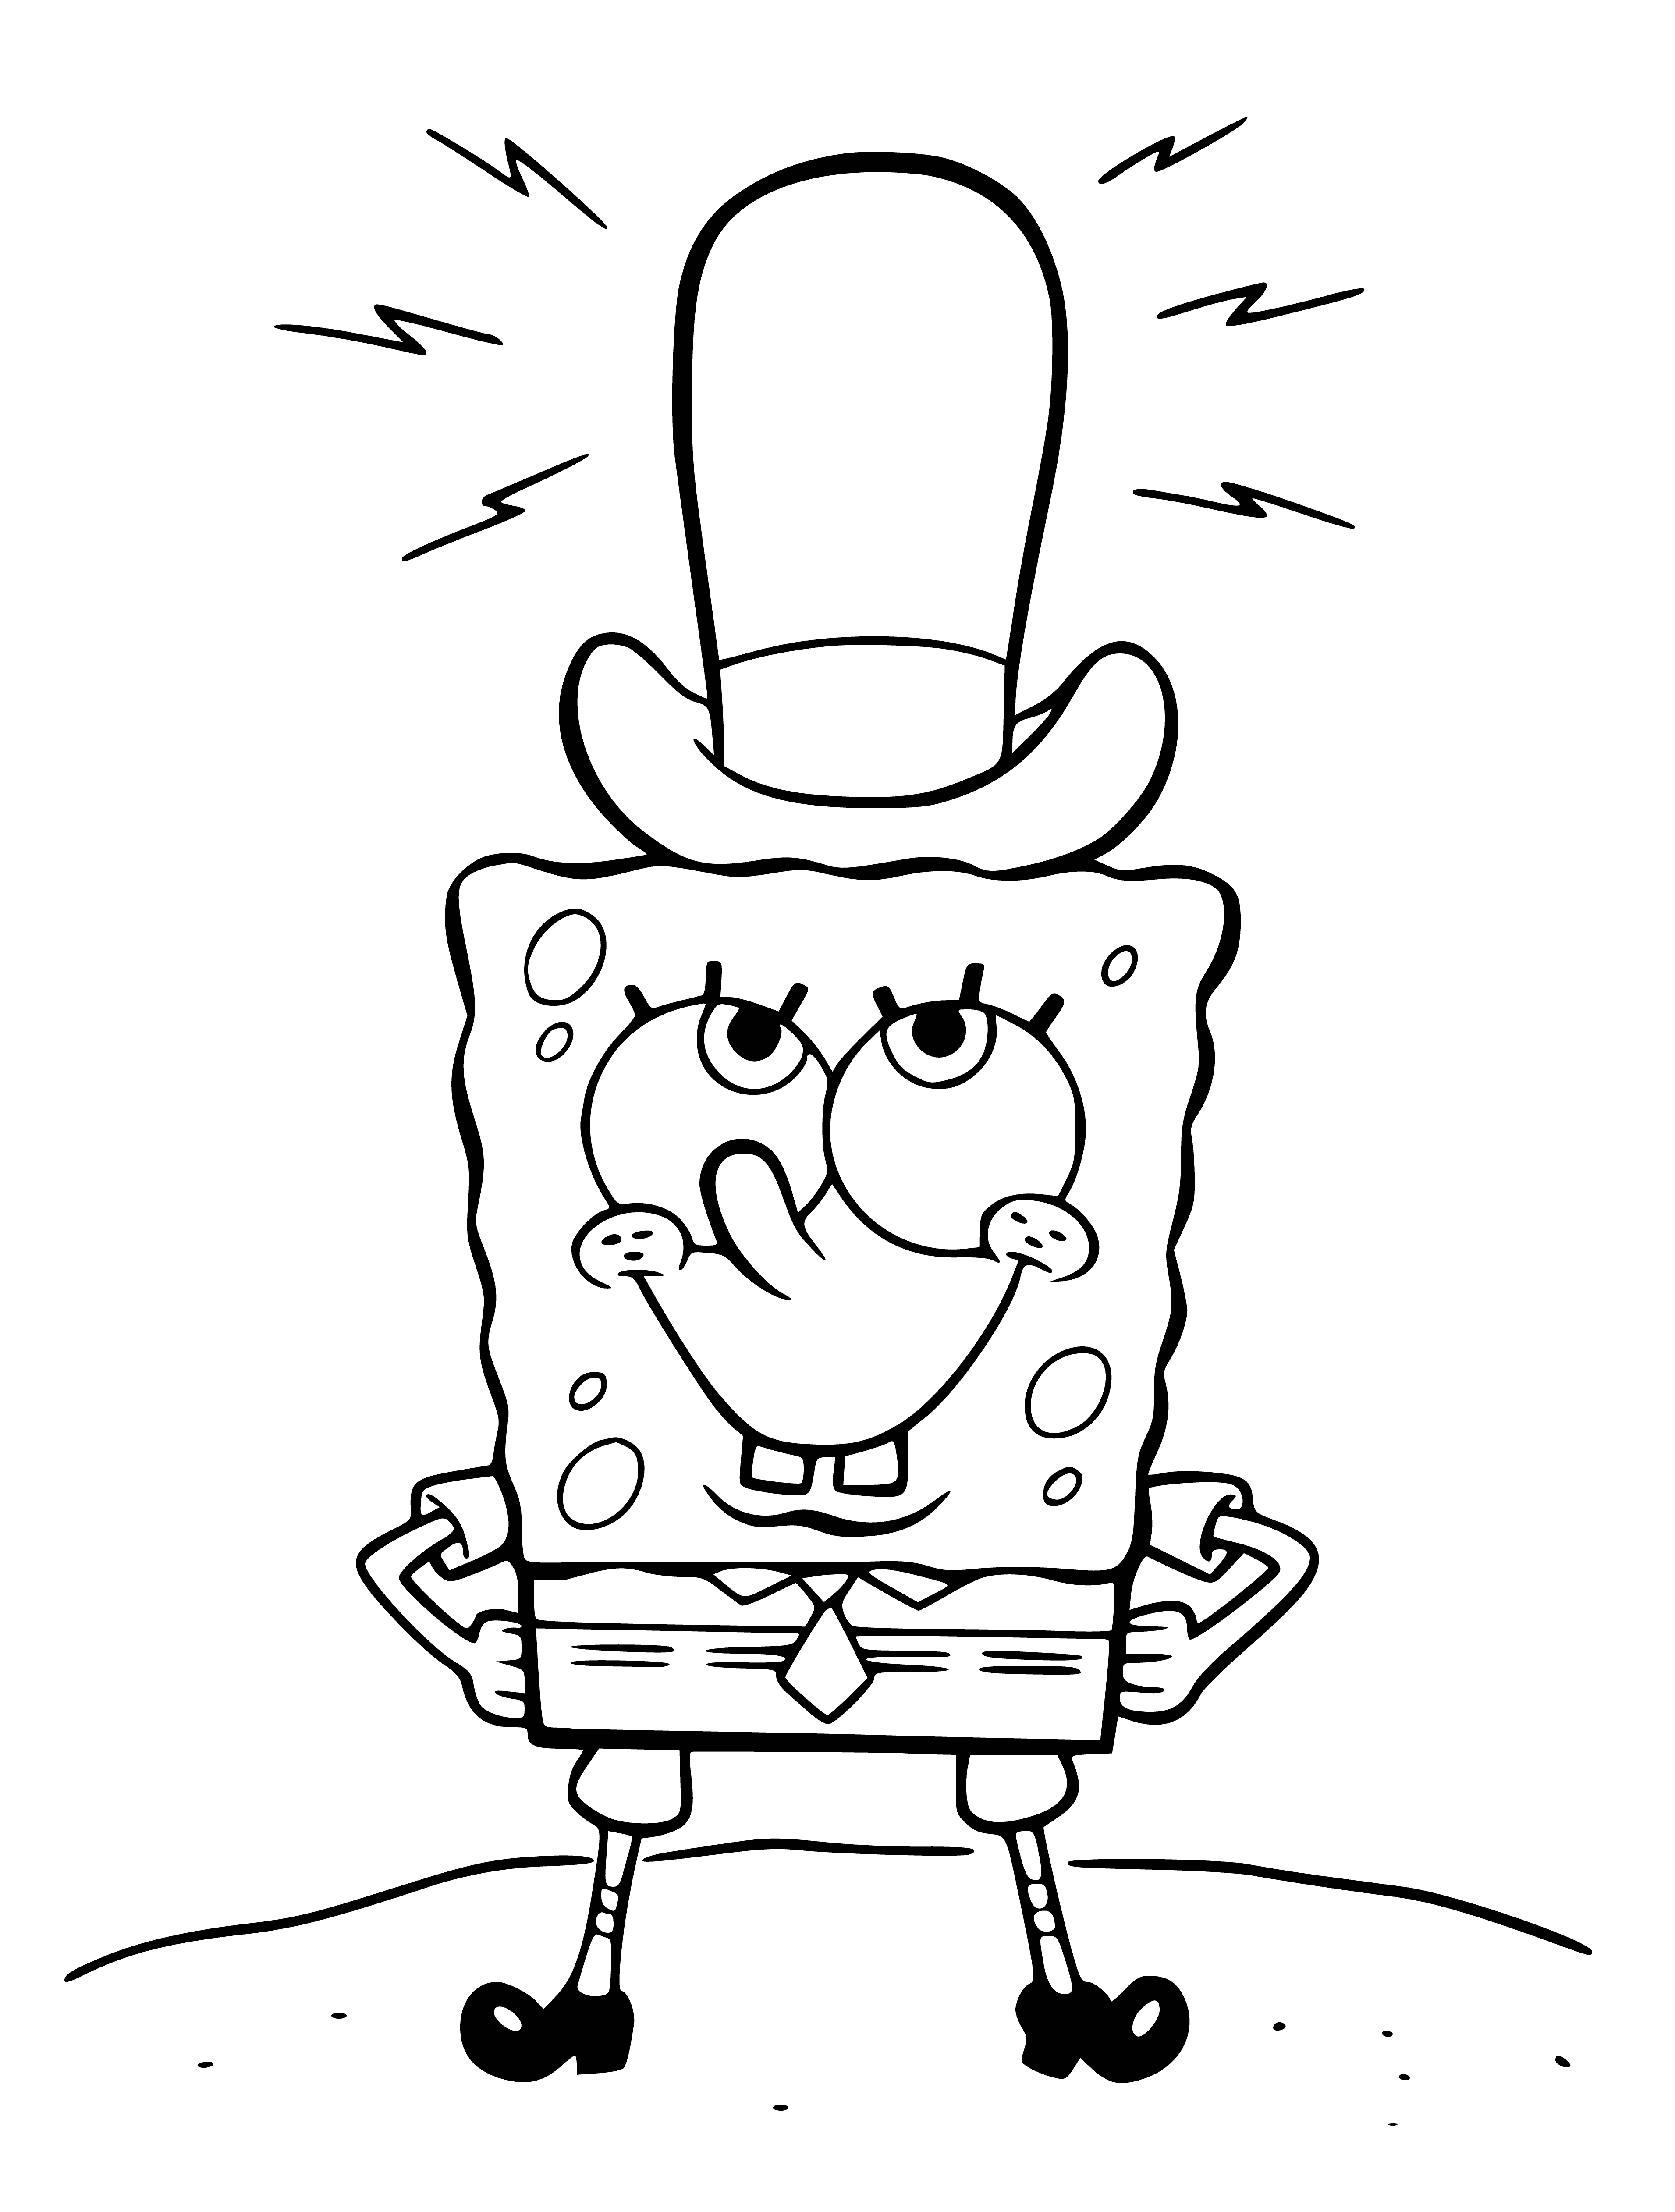 Sponge Bob Square Pants coloring page